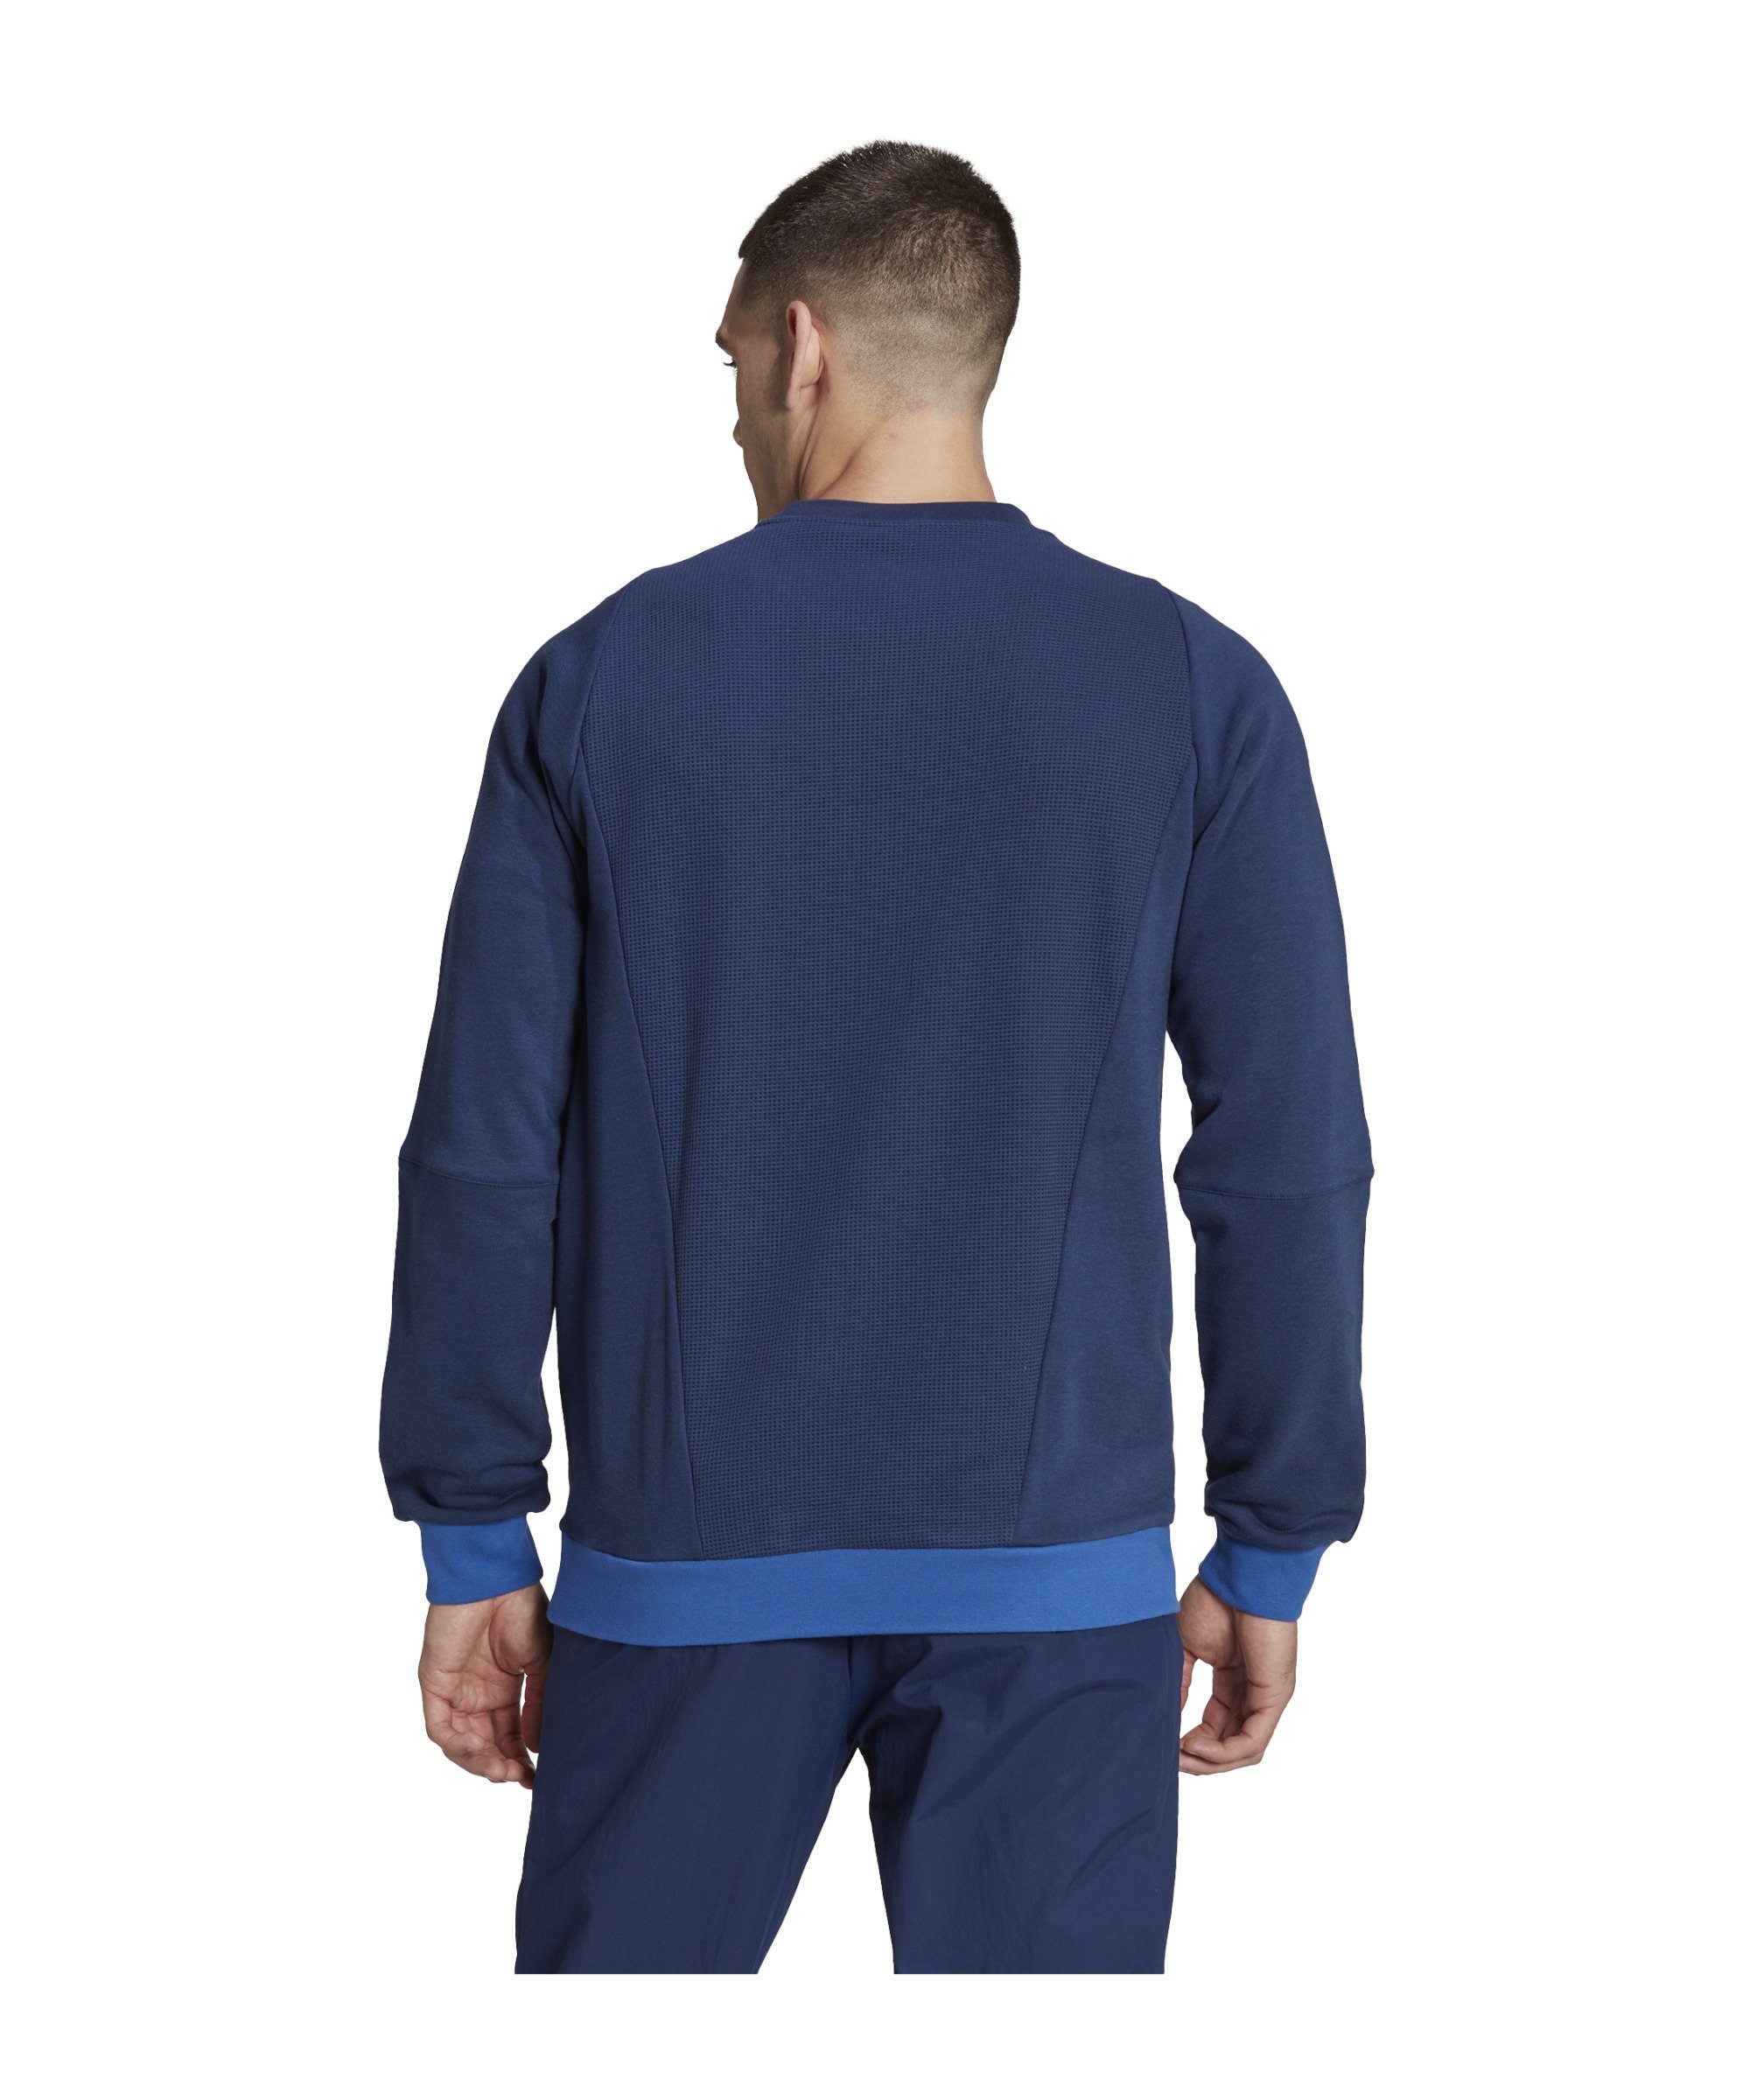 Sweatshirt Performance dunkelblau Competition adidas 23 Sweatshirt Tiro